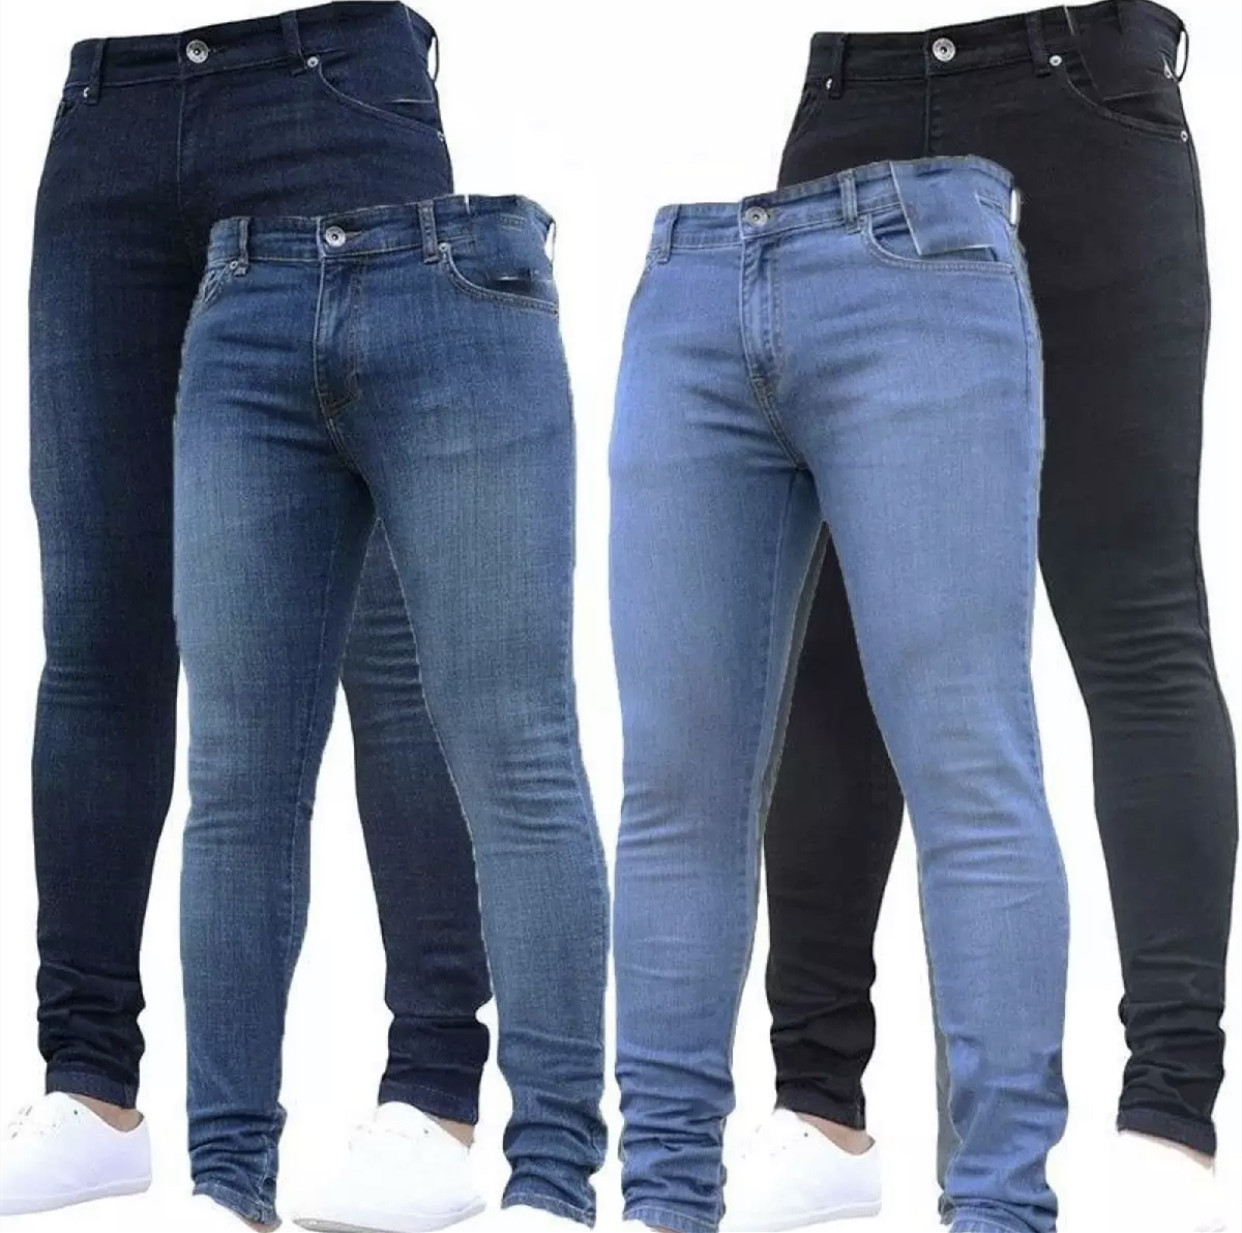 Buy Jeans At Best Price Online Lazada Com Ph - pastel blue pants roblox